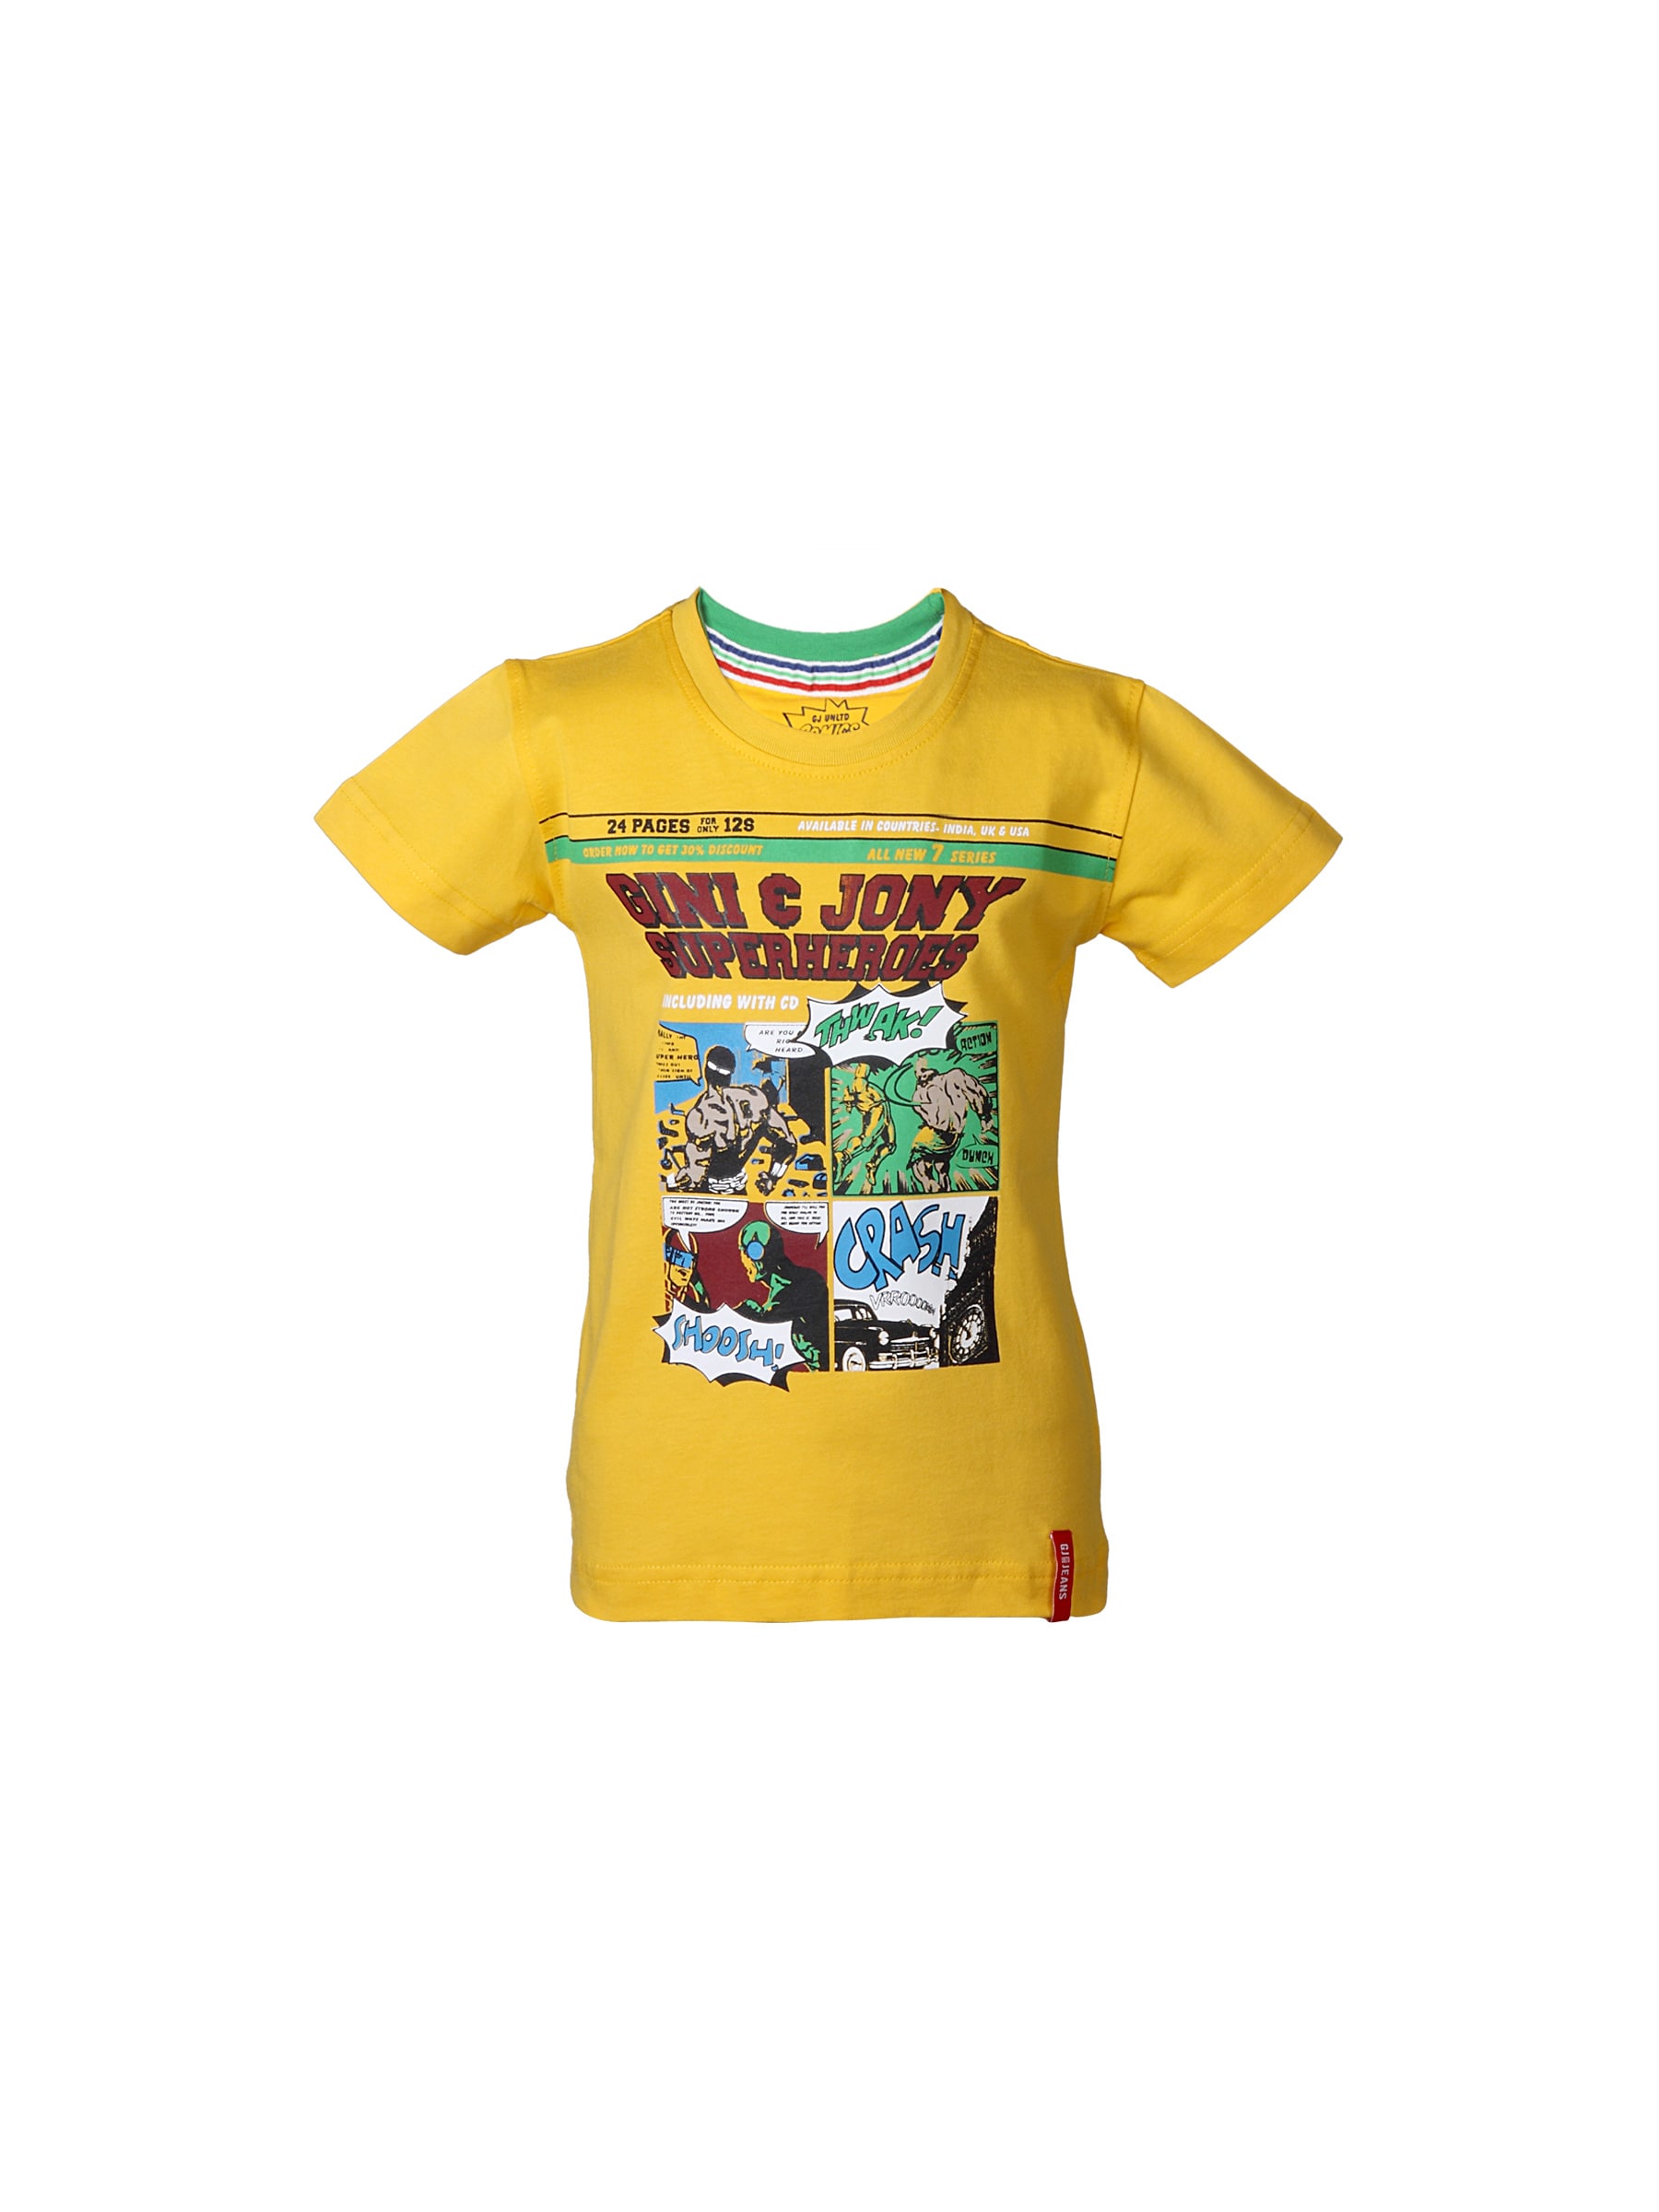 Gini and Jony Boys Printed Yellow T-shirt